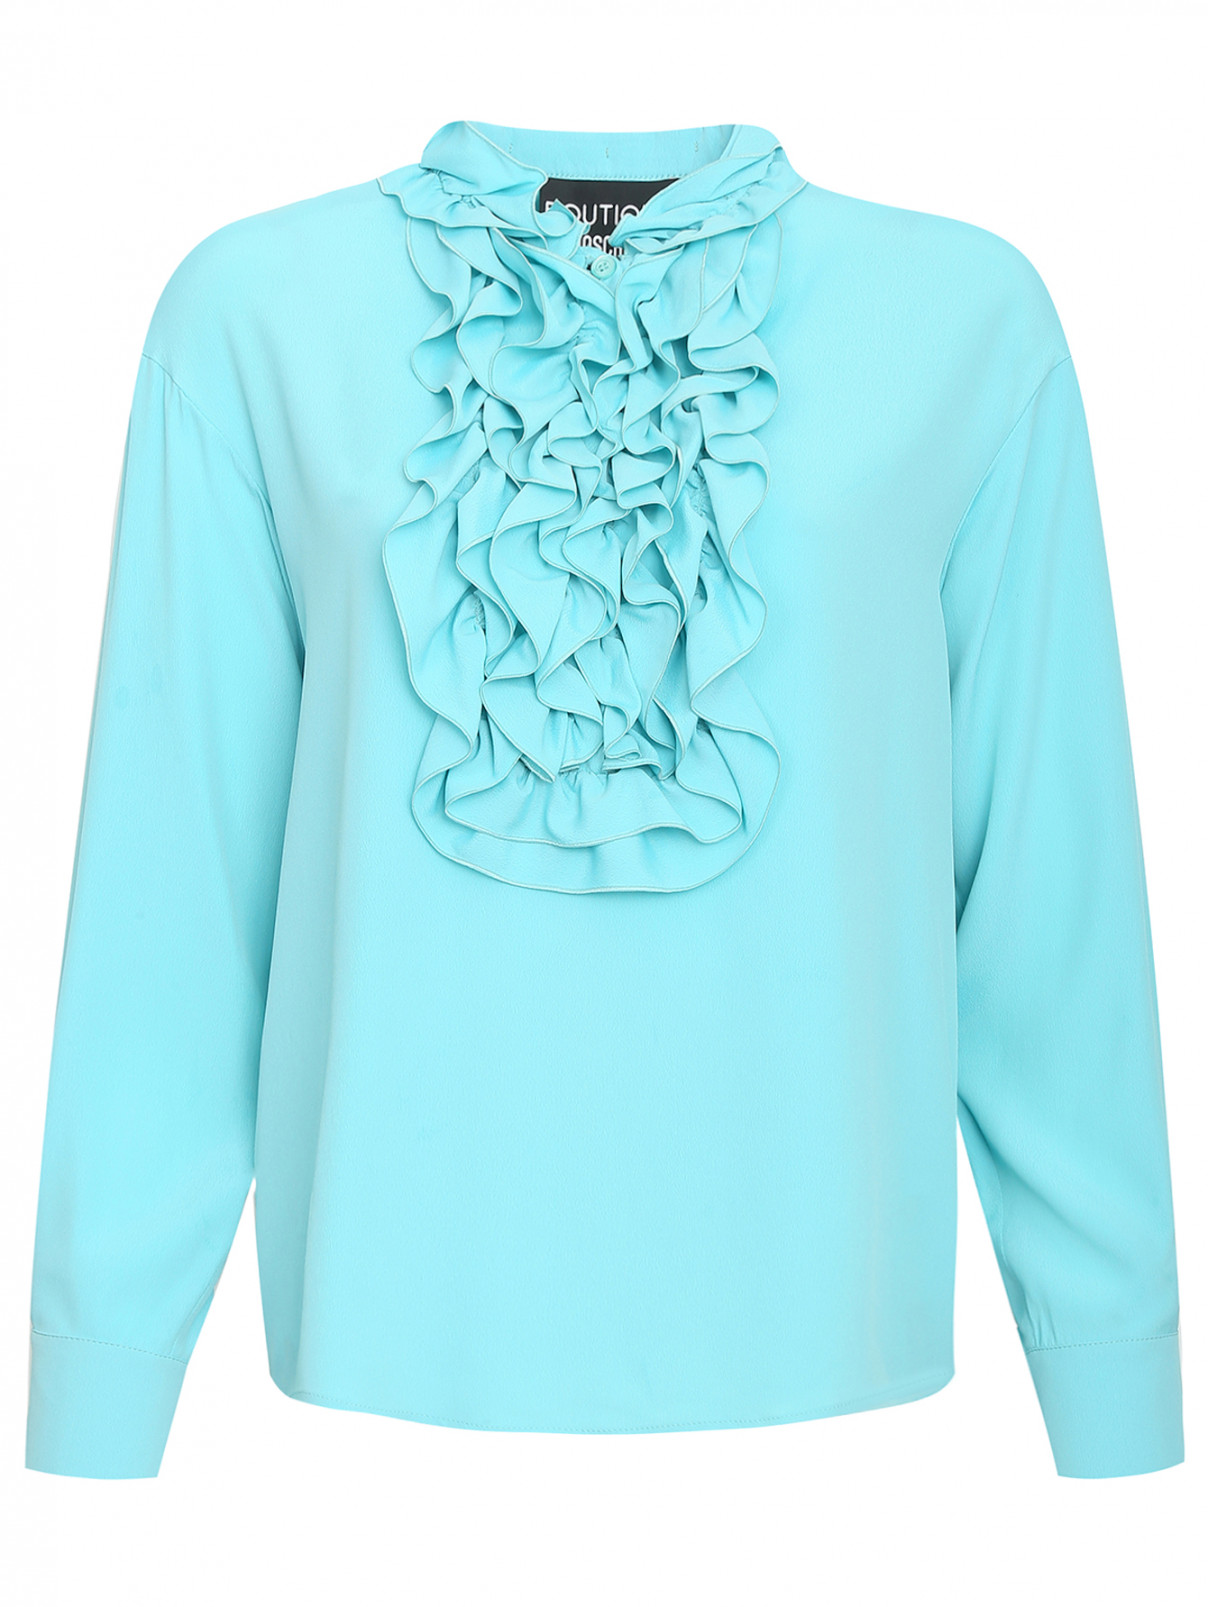 Блуза с жабо Moschino Boutique  –  Общий вид  – Цвет:  Синий